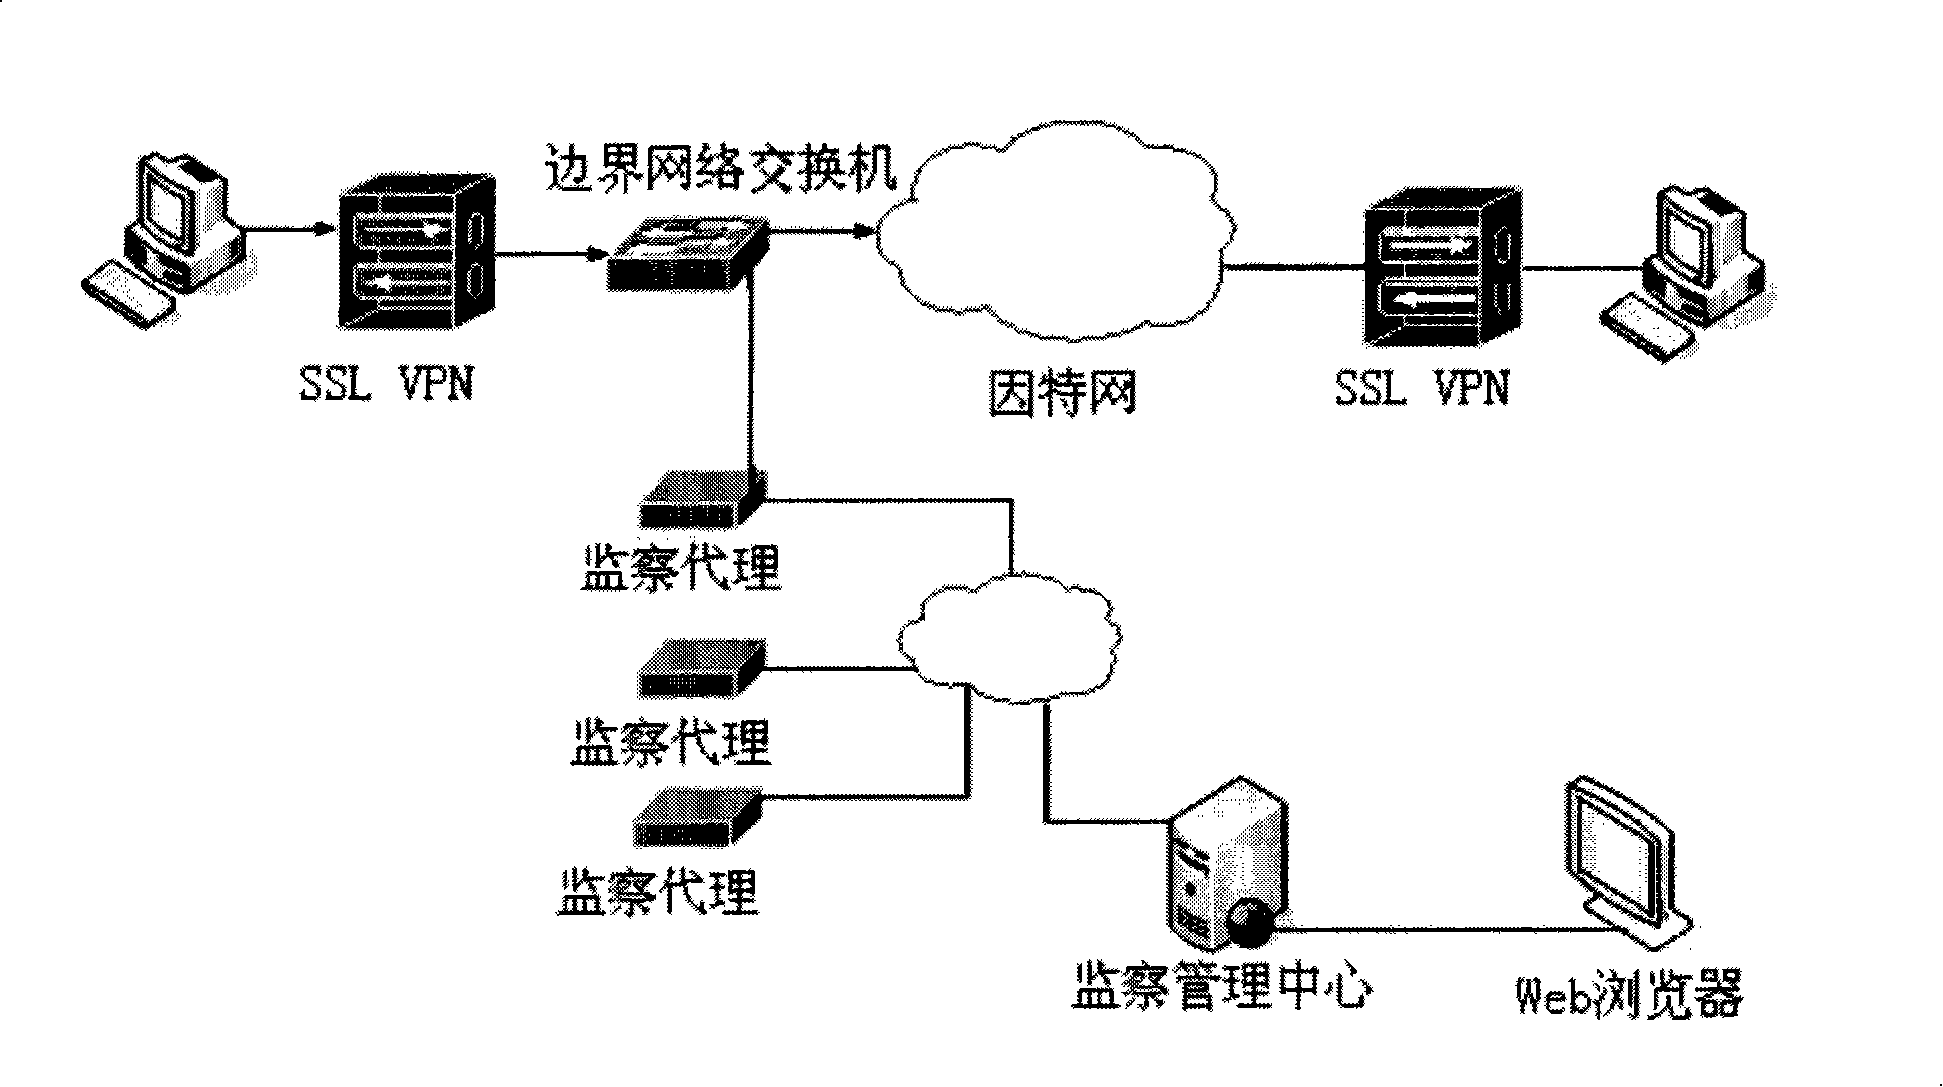 SSL VPN protocol detection method based on flow analysis